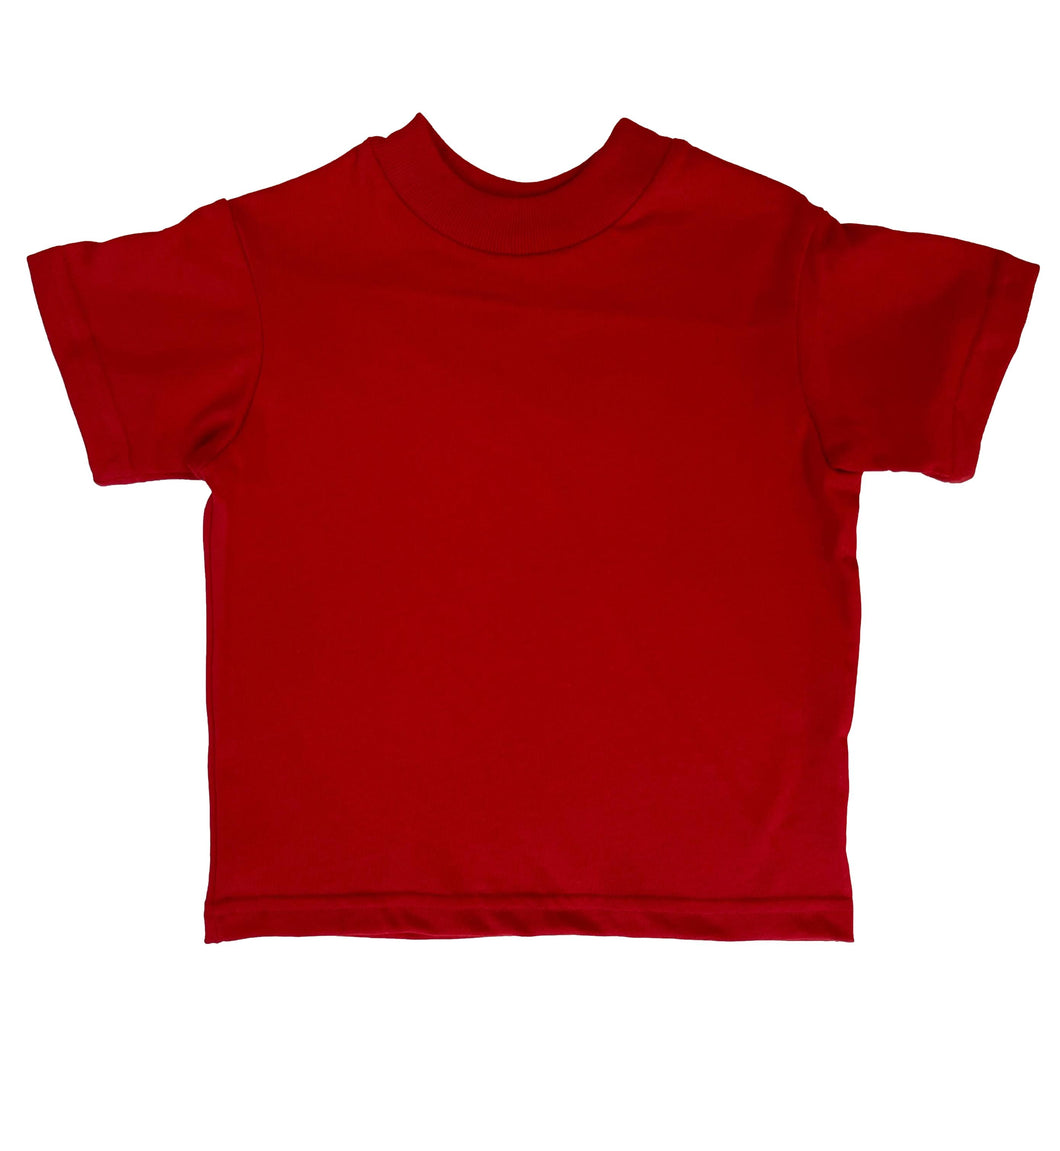 Short Sleeve Red Tee Shirt